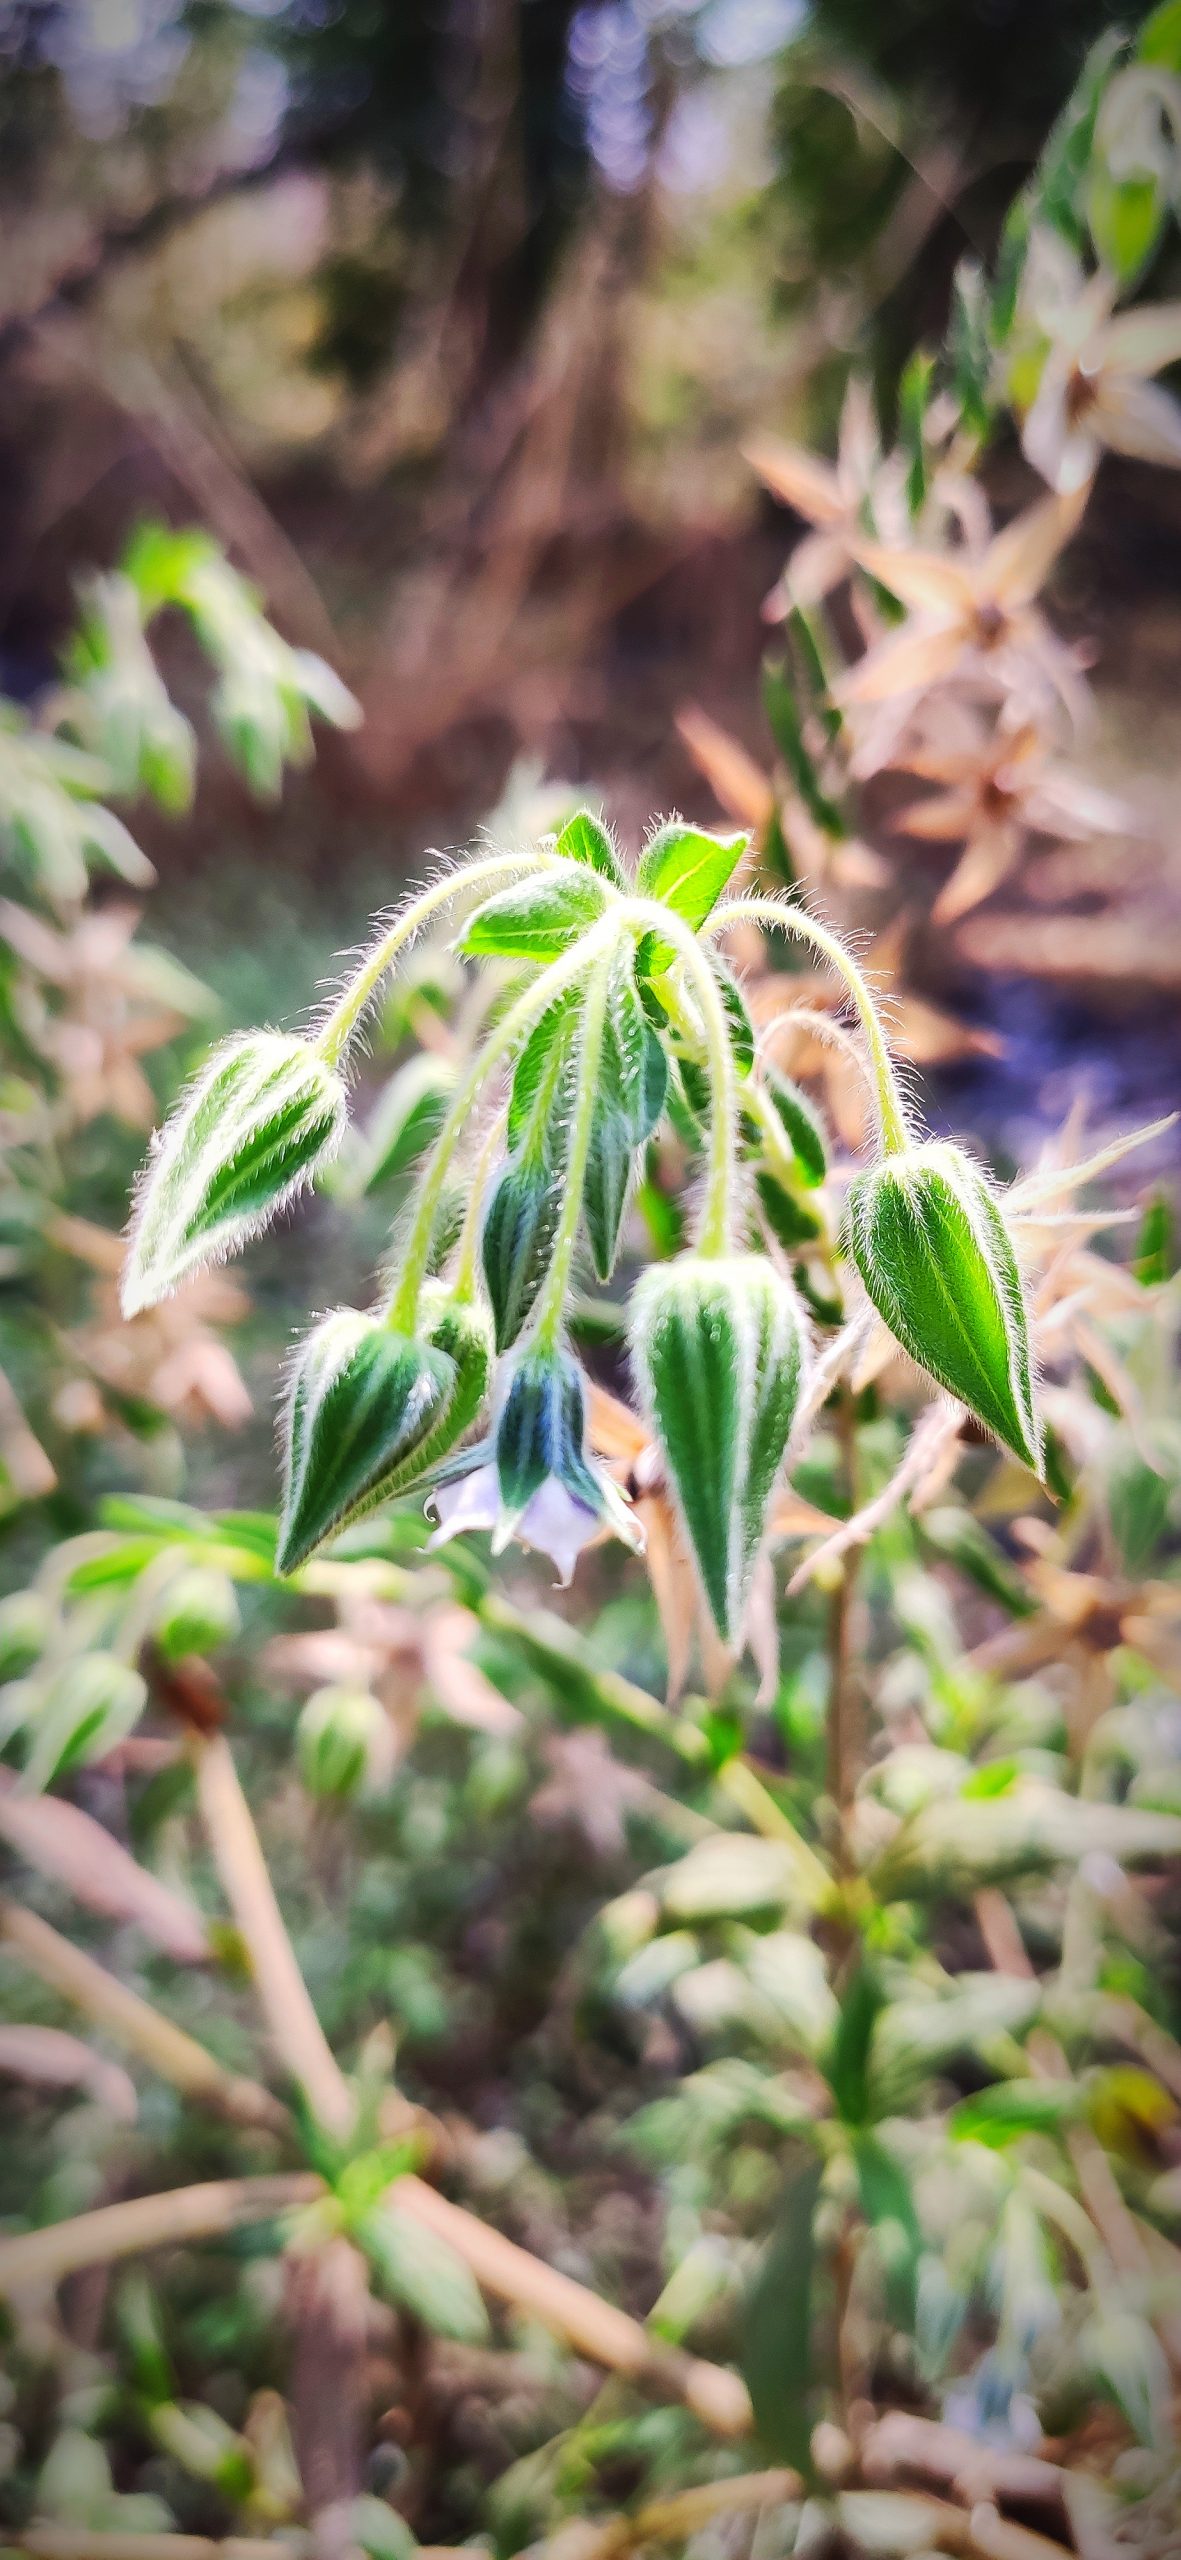 Trichodesma plant